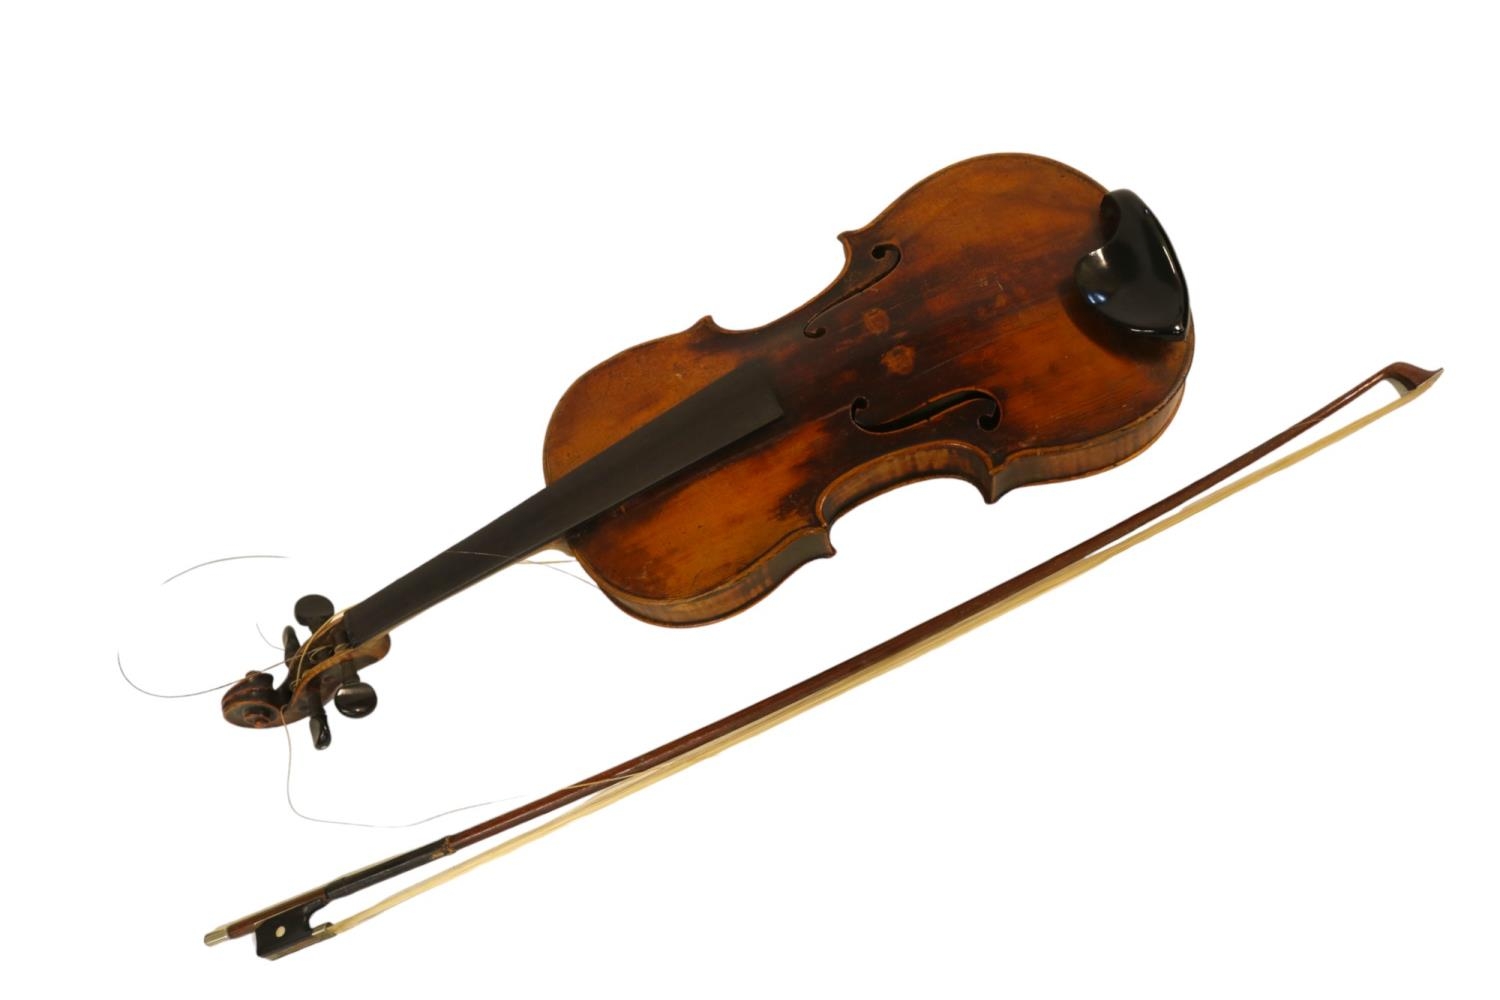 Violin attributed to Mathias Albani or Matthias Alban violin maker from Botzen (now Bolzano). With